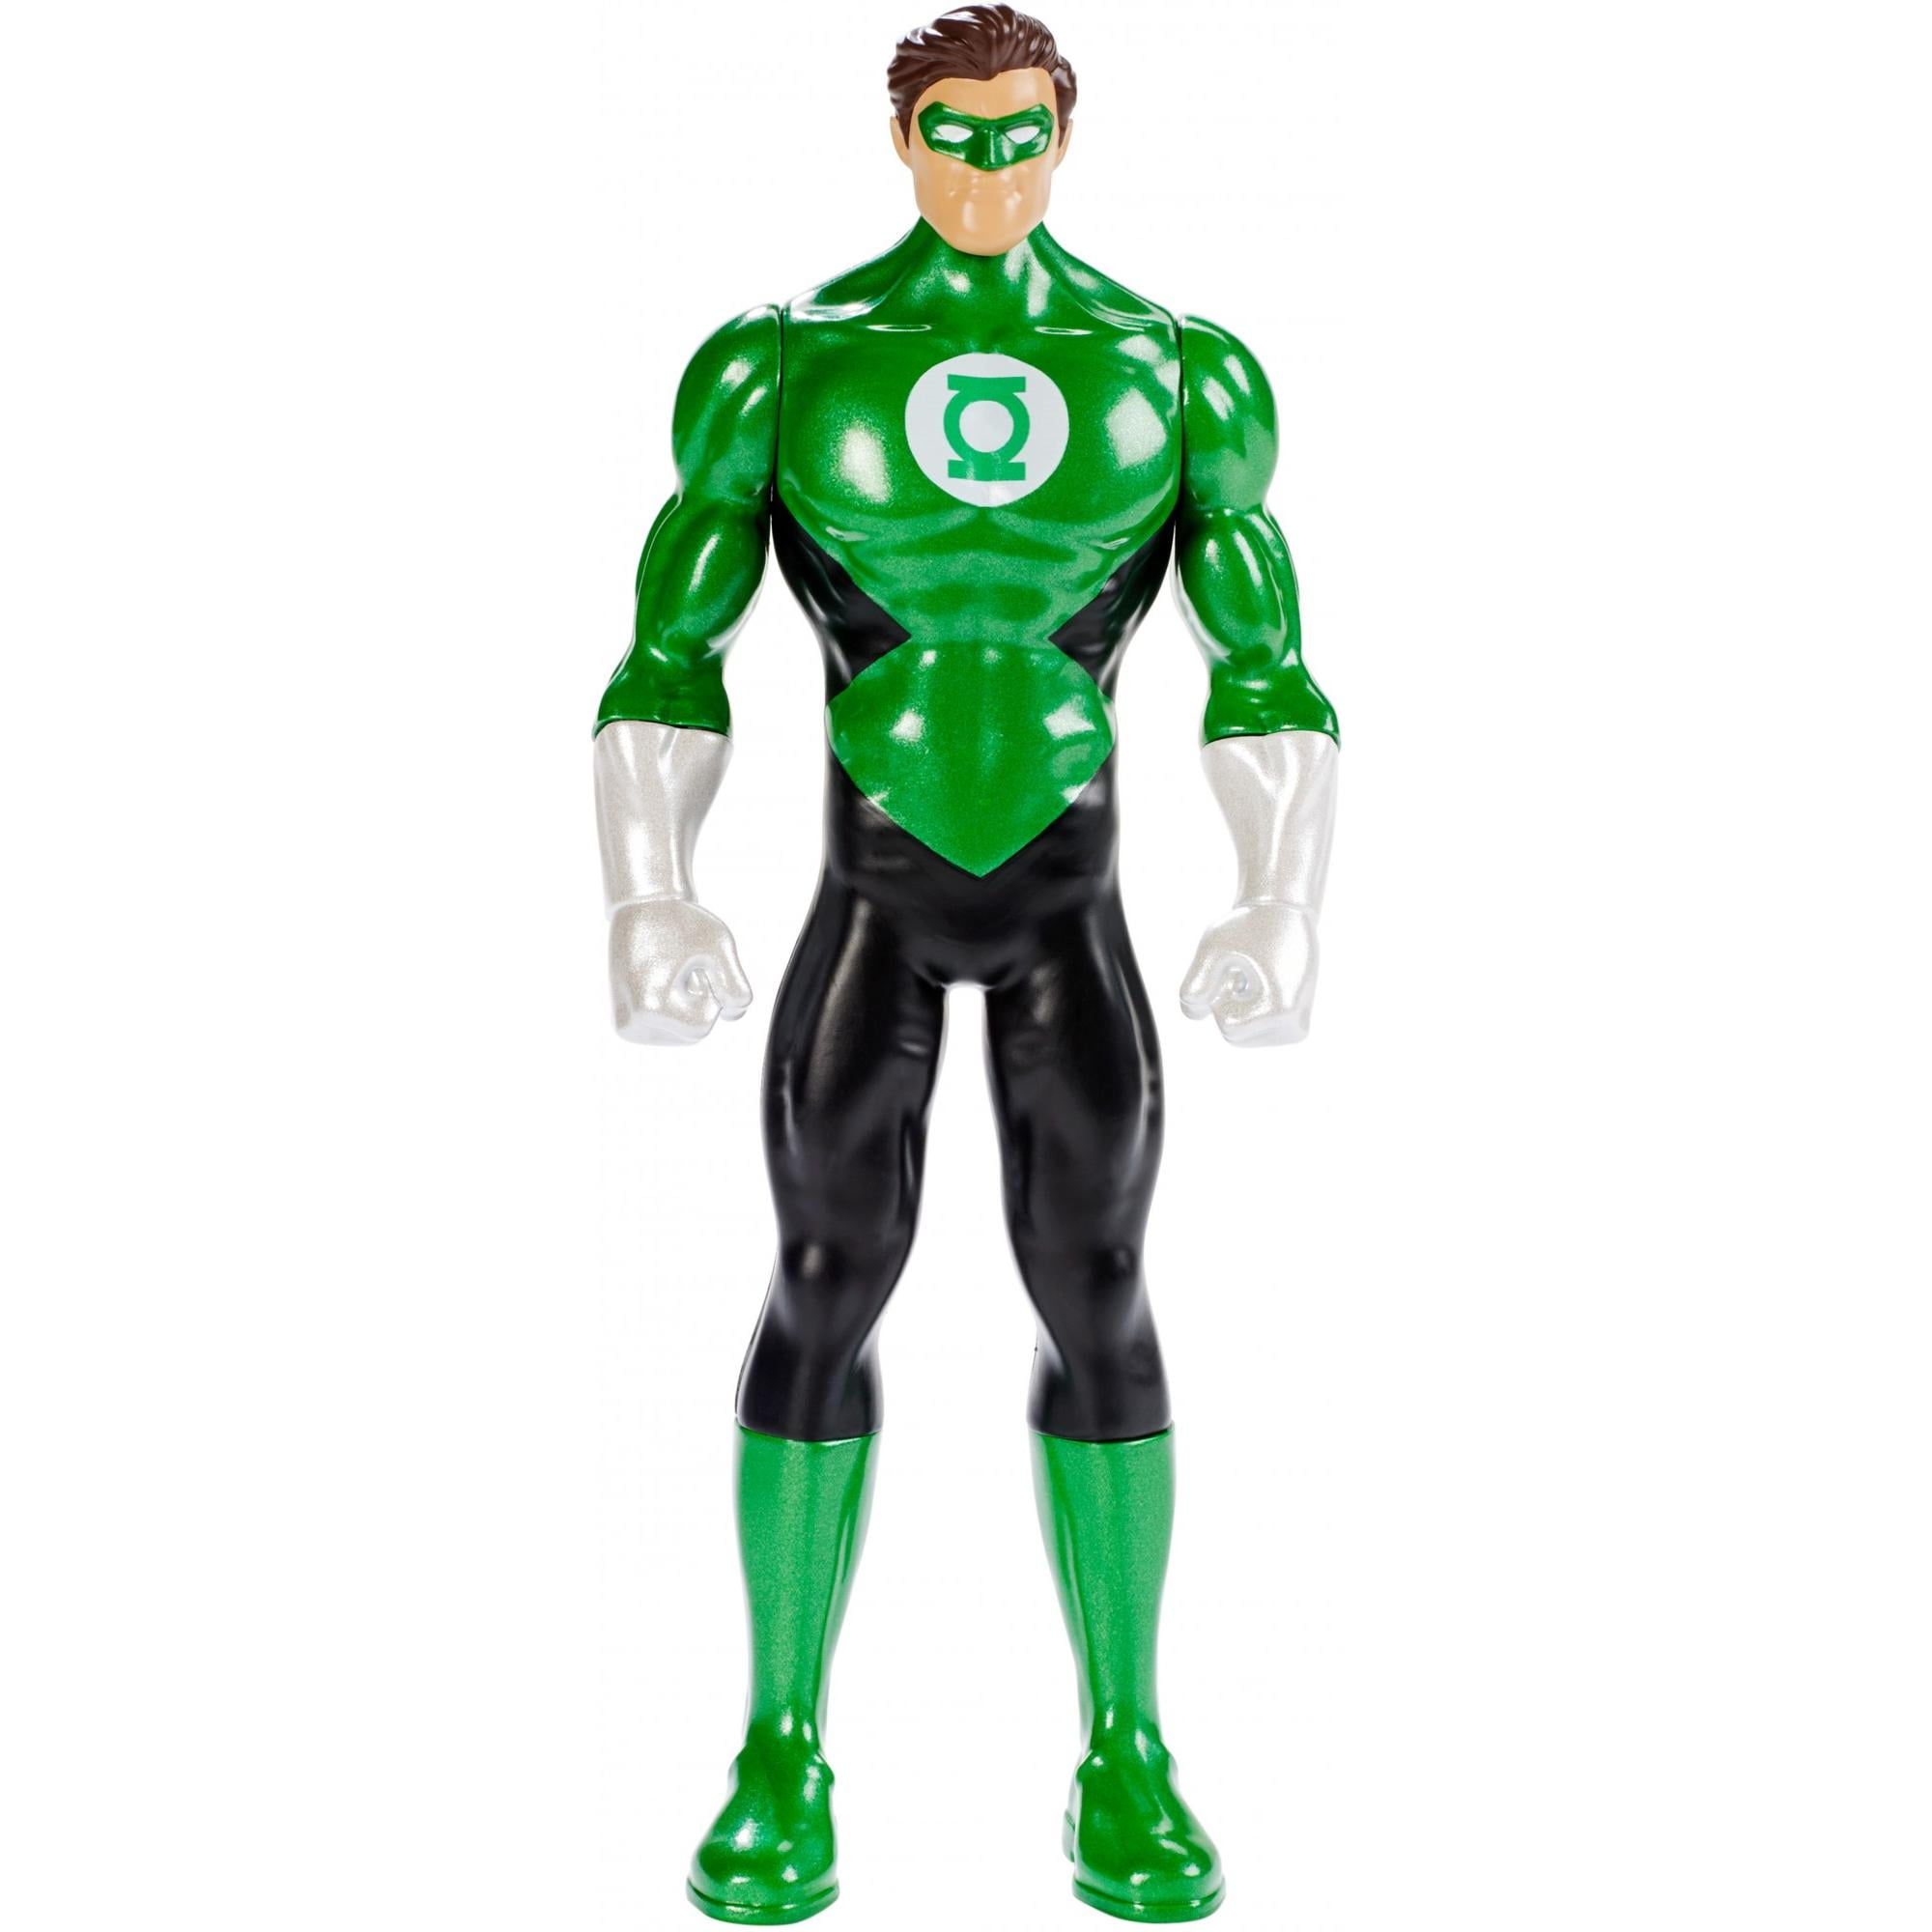 DC Direct Justice League Green Lantern Action Figure for sale online